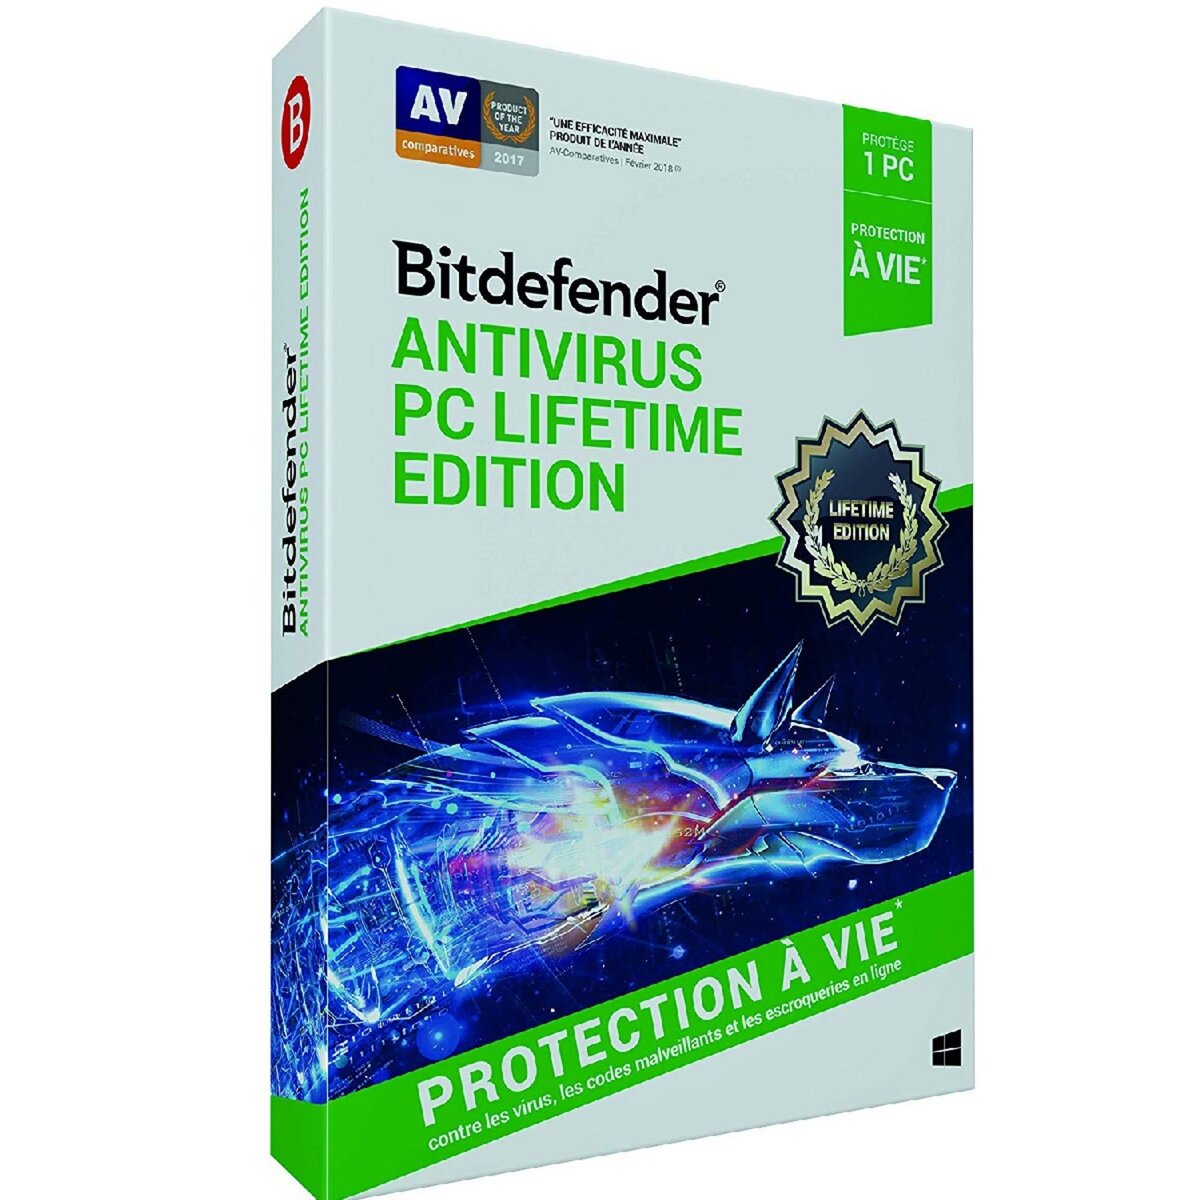 Bitdefender Antivirus PC Lifetime 2019